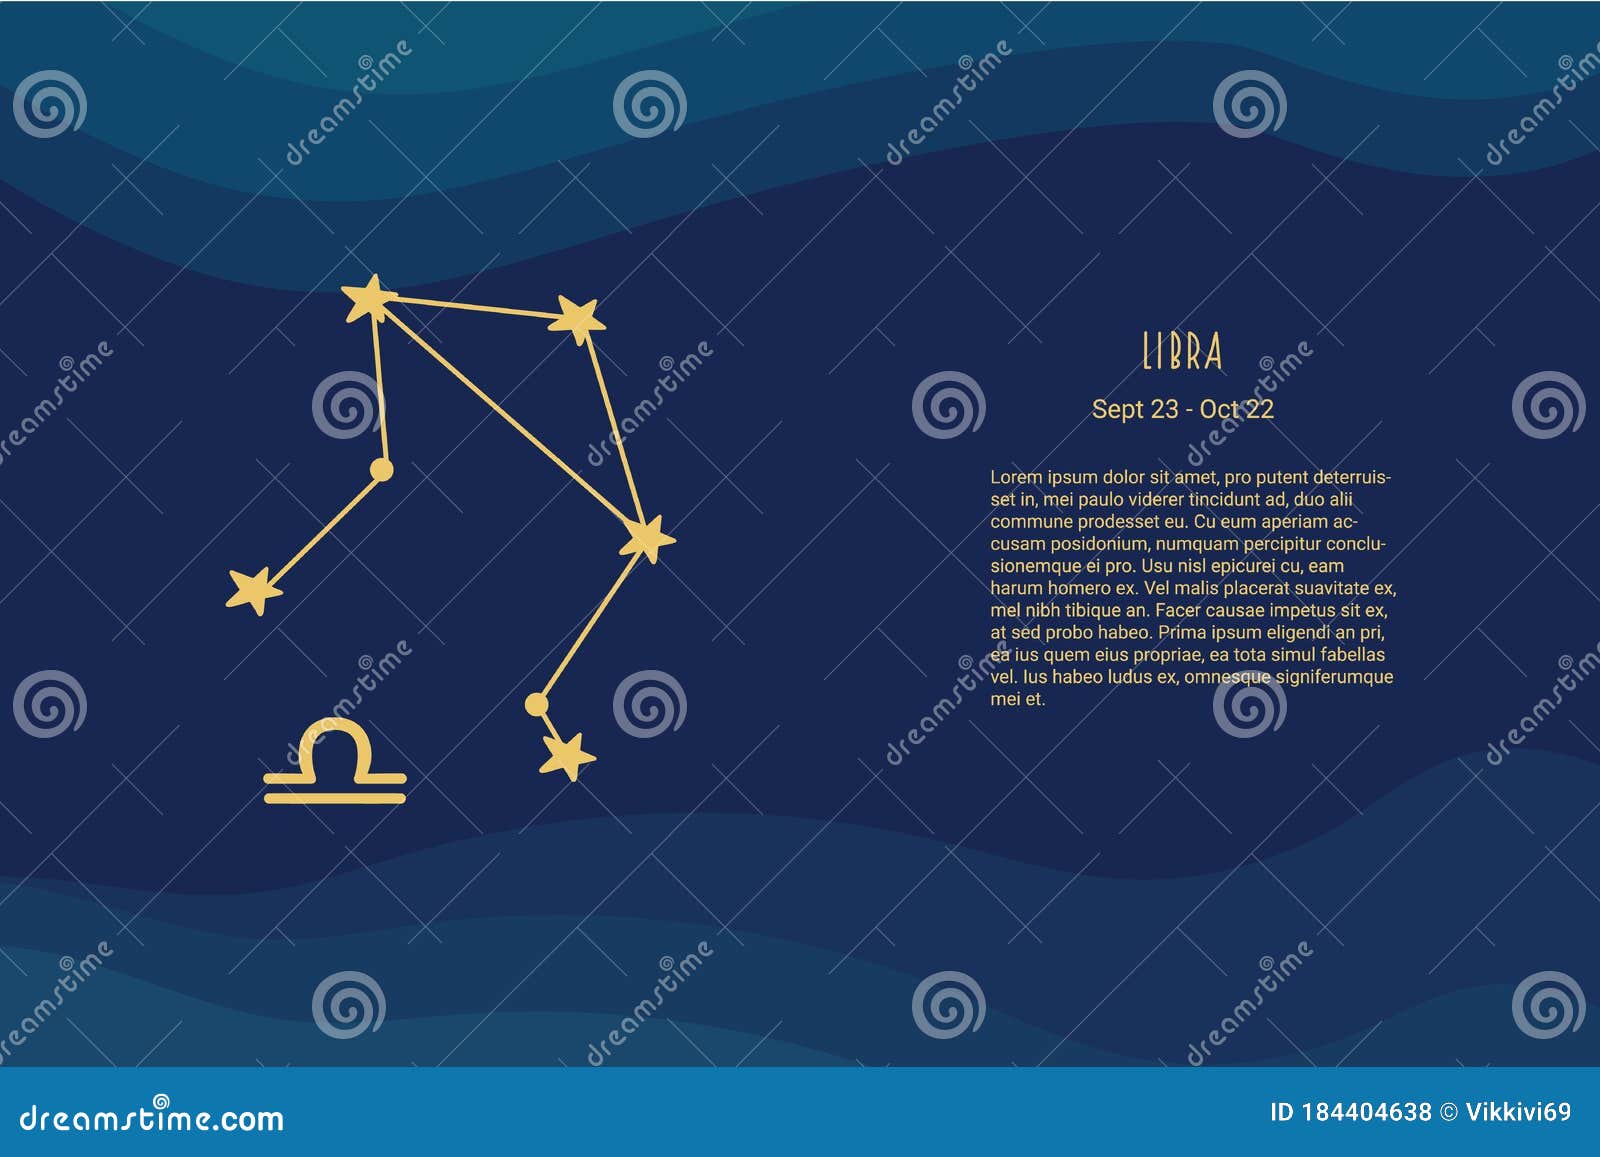 Horoscope Background. Libra. Horoscope Vector Background Stock Vector ...